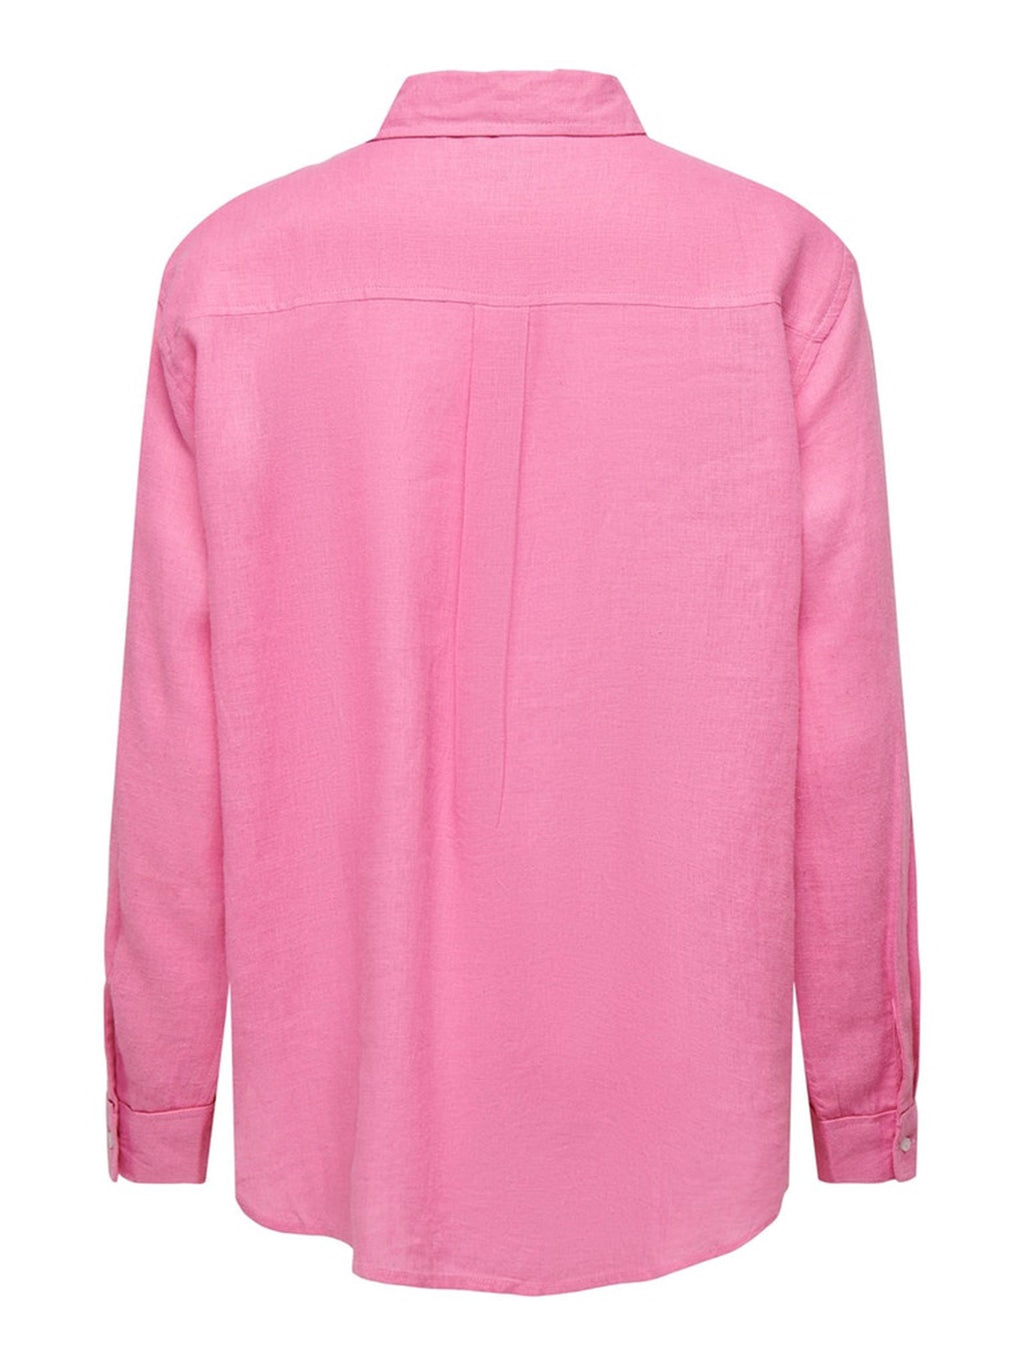 Tokyo Linen Skjorta - Sachet Pink